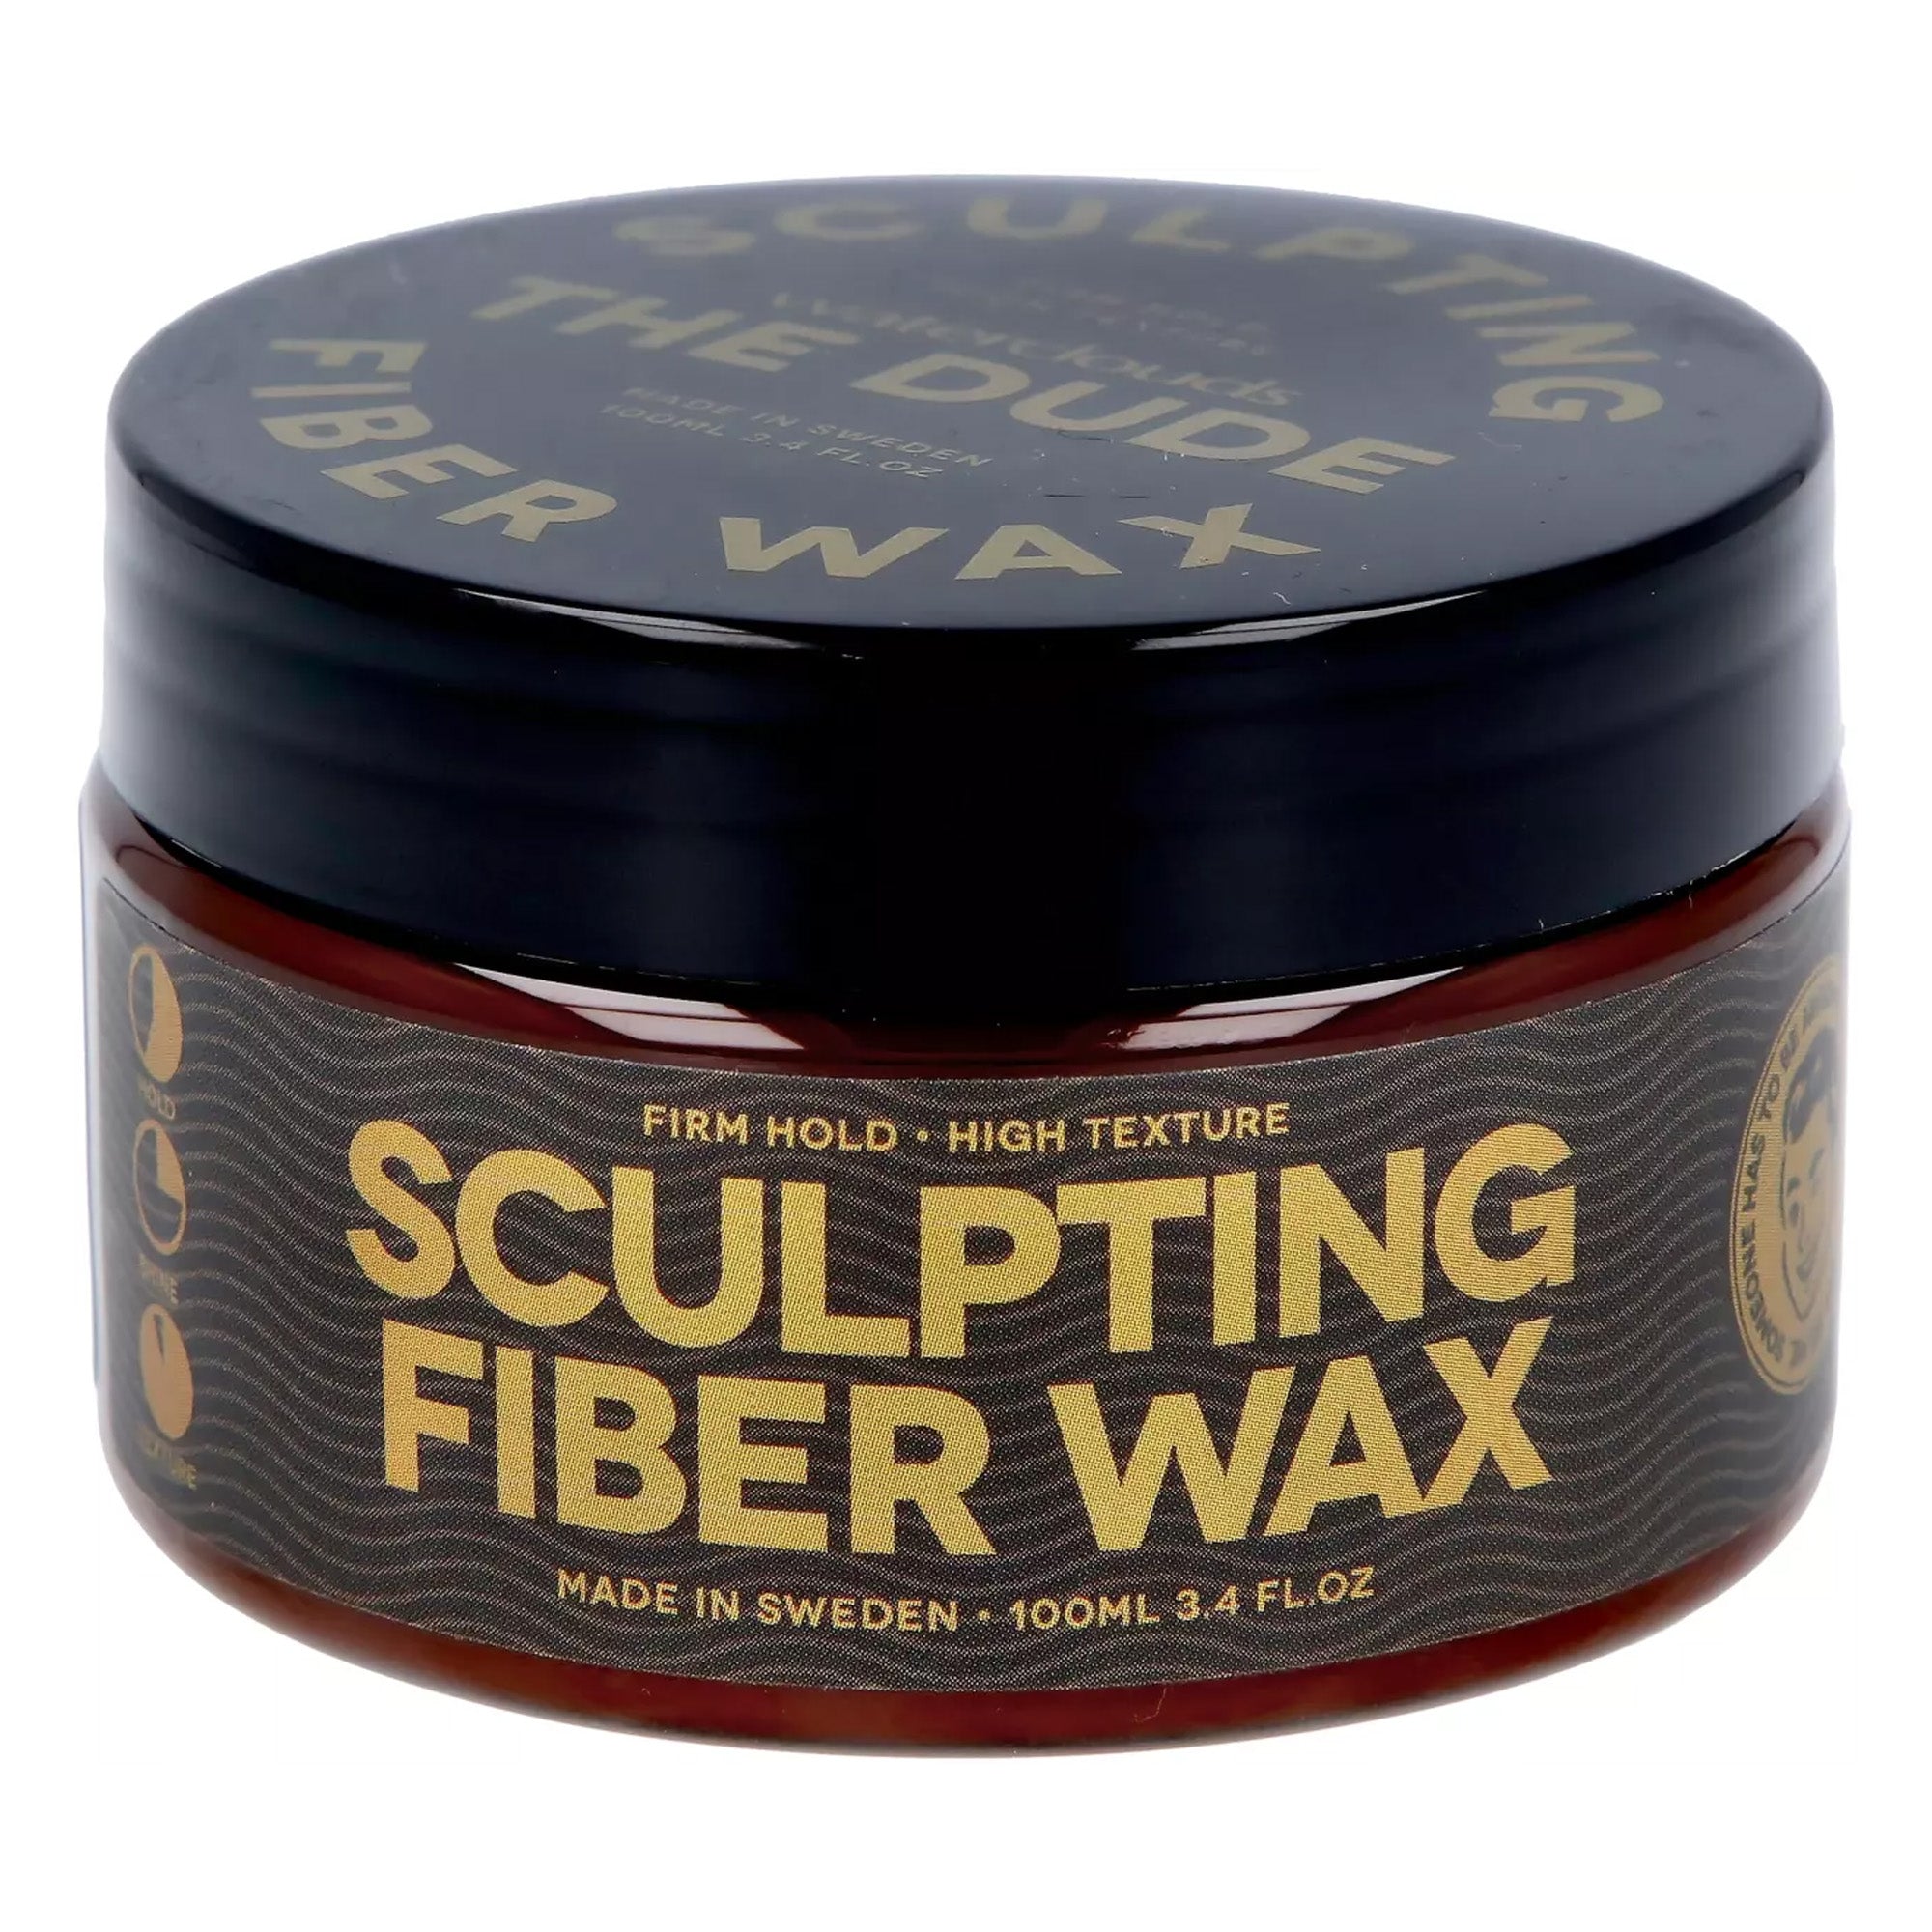 Sculpting fiber wax 100ml